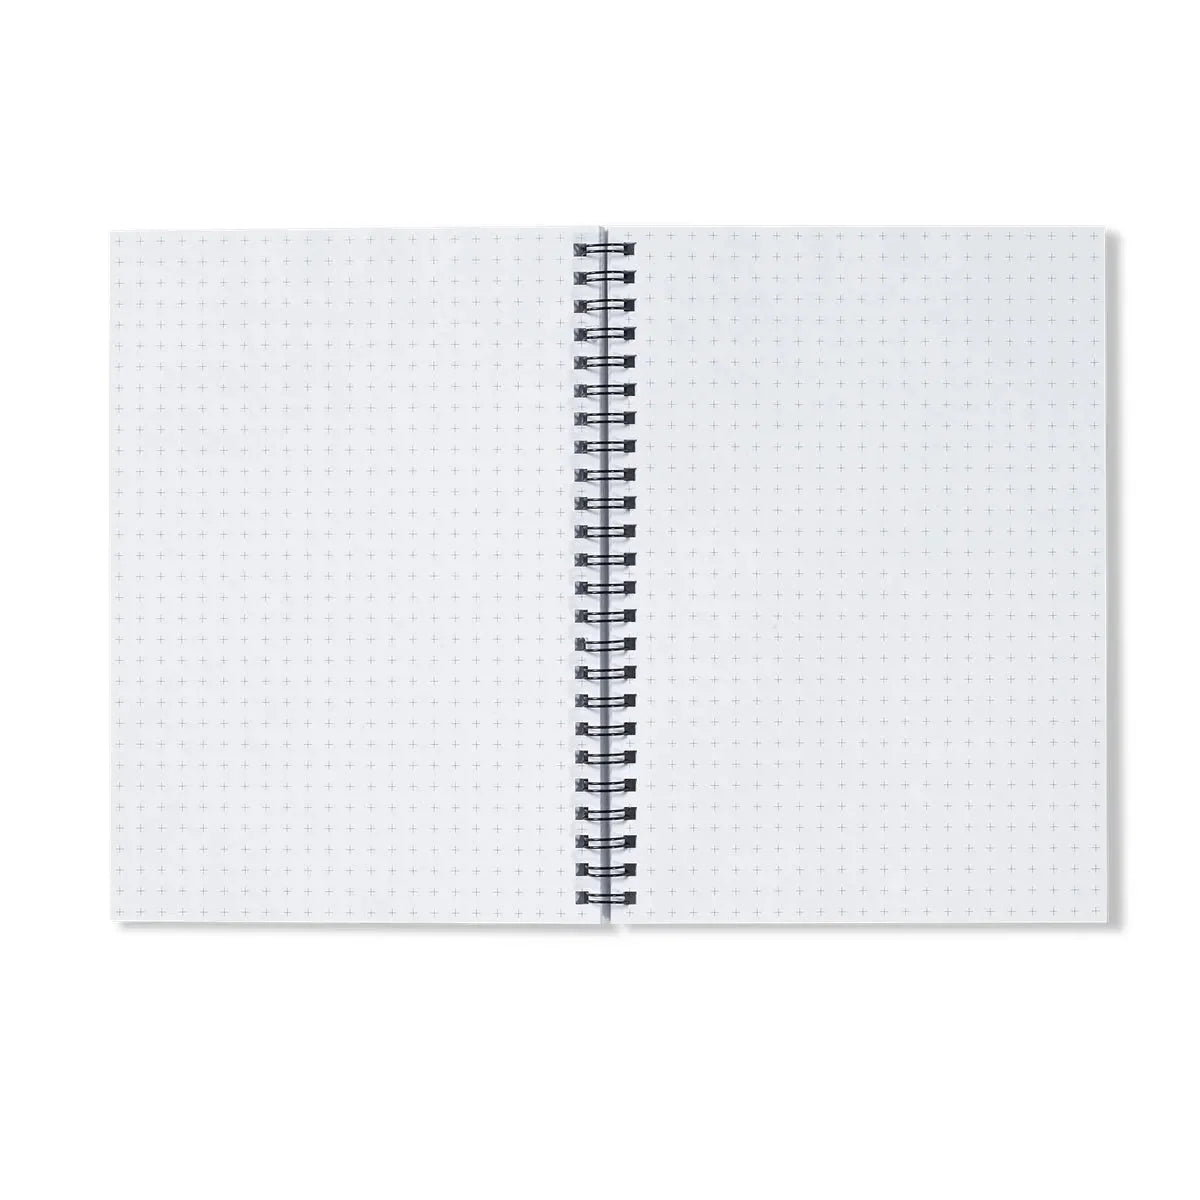 Flying High 9 Notebook - Notebooks & Notepads - Aesthetic Art